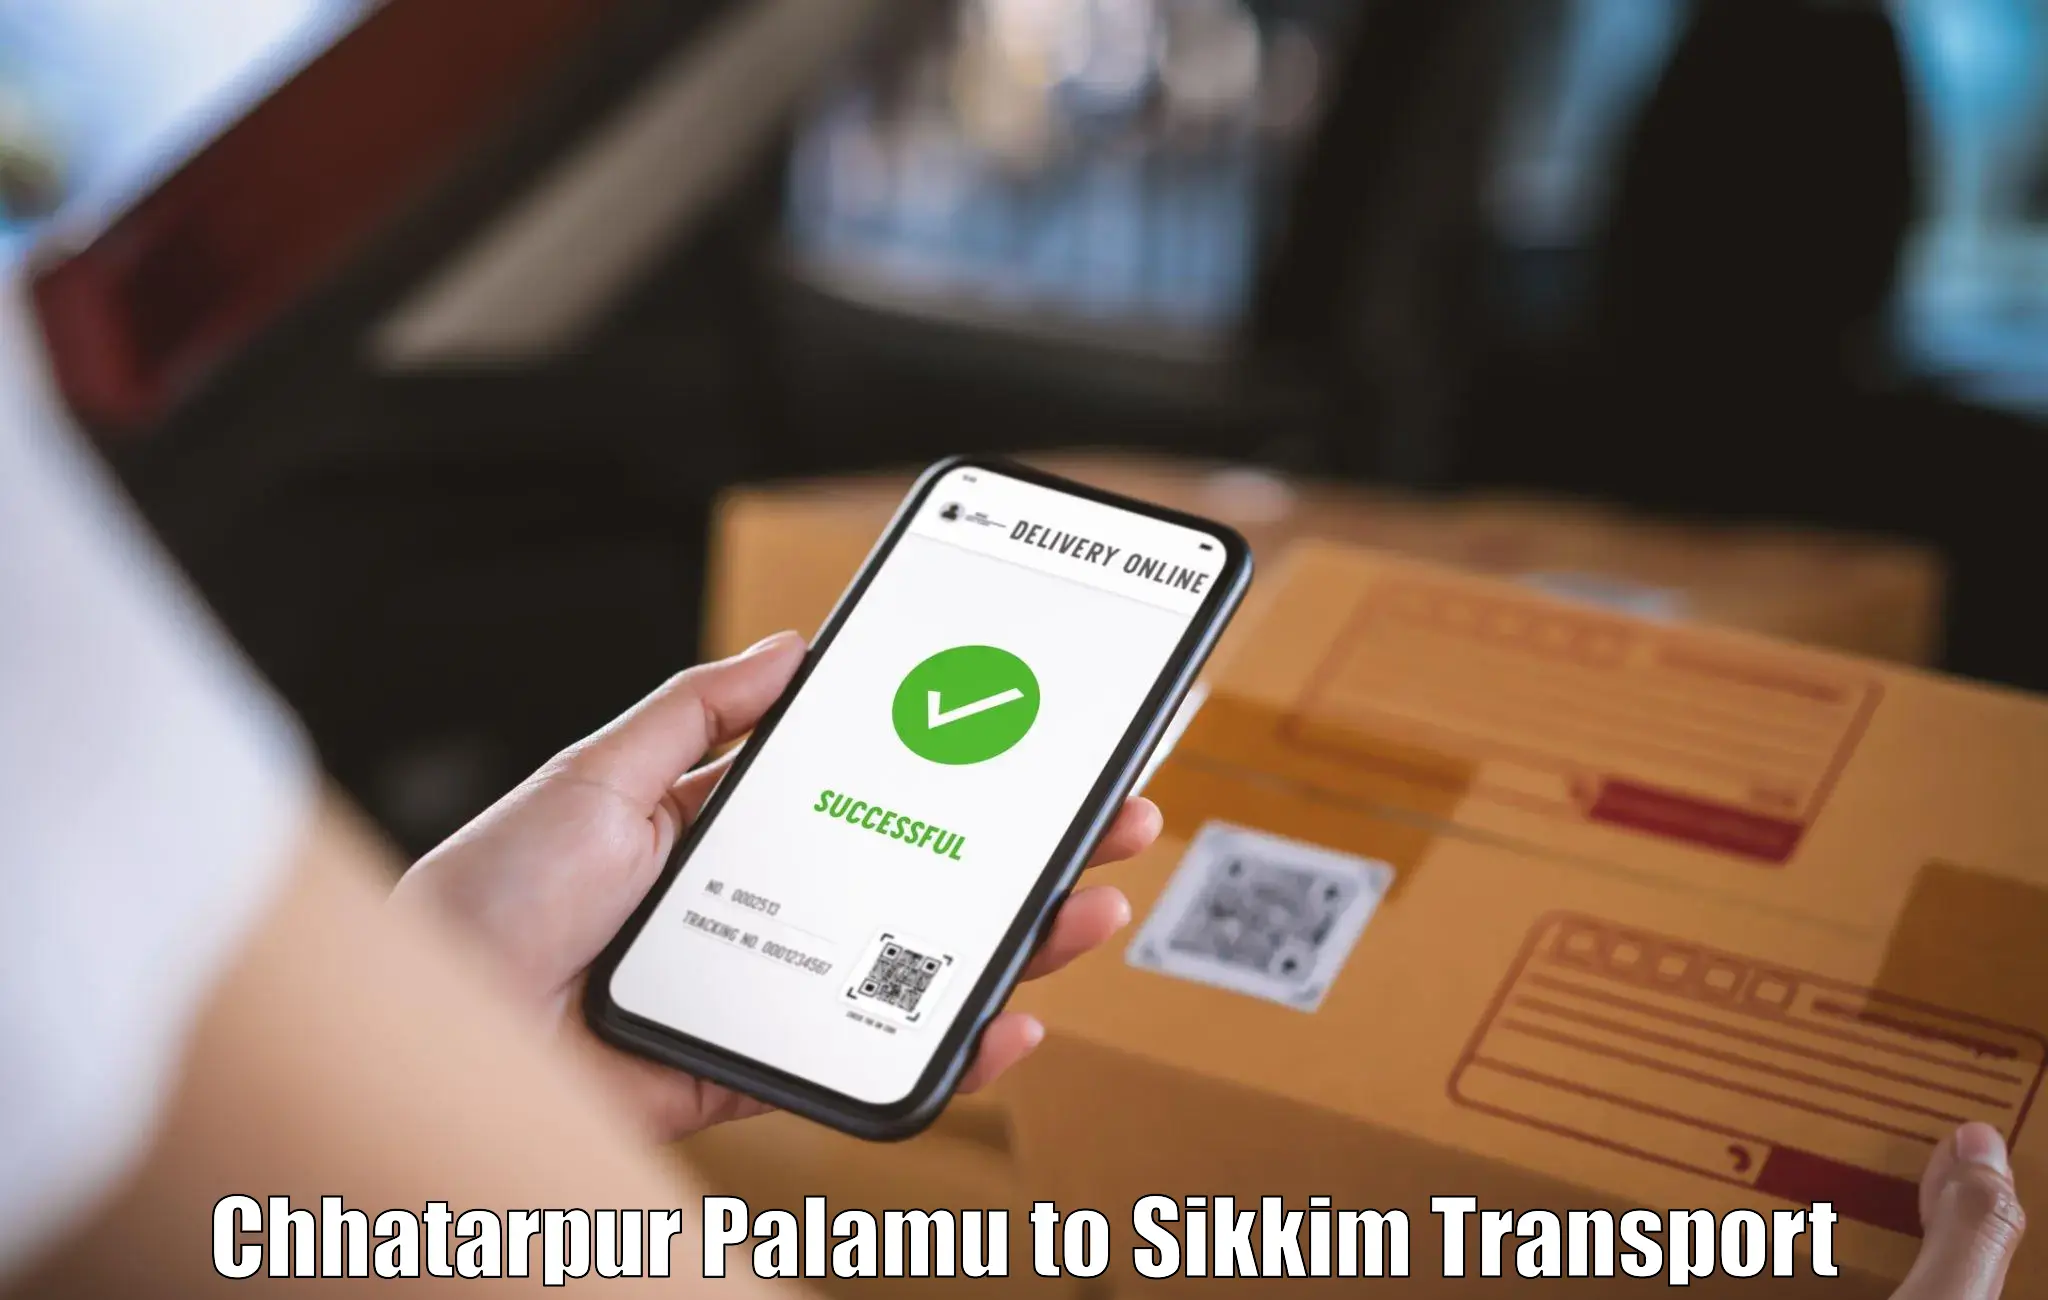 Delivery service Chhatarpur Palamu to Gangtok